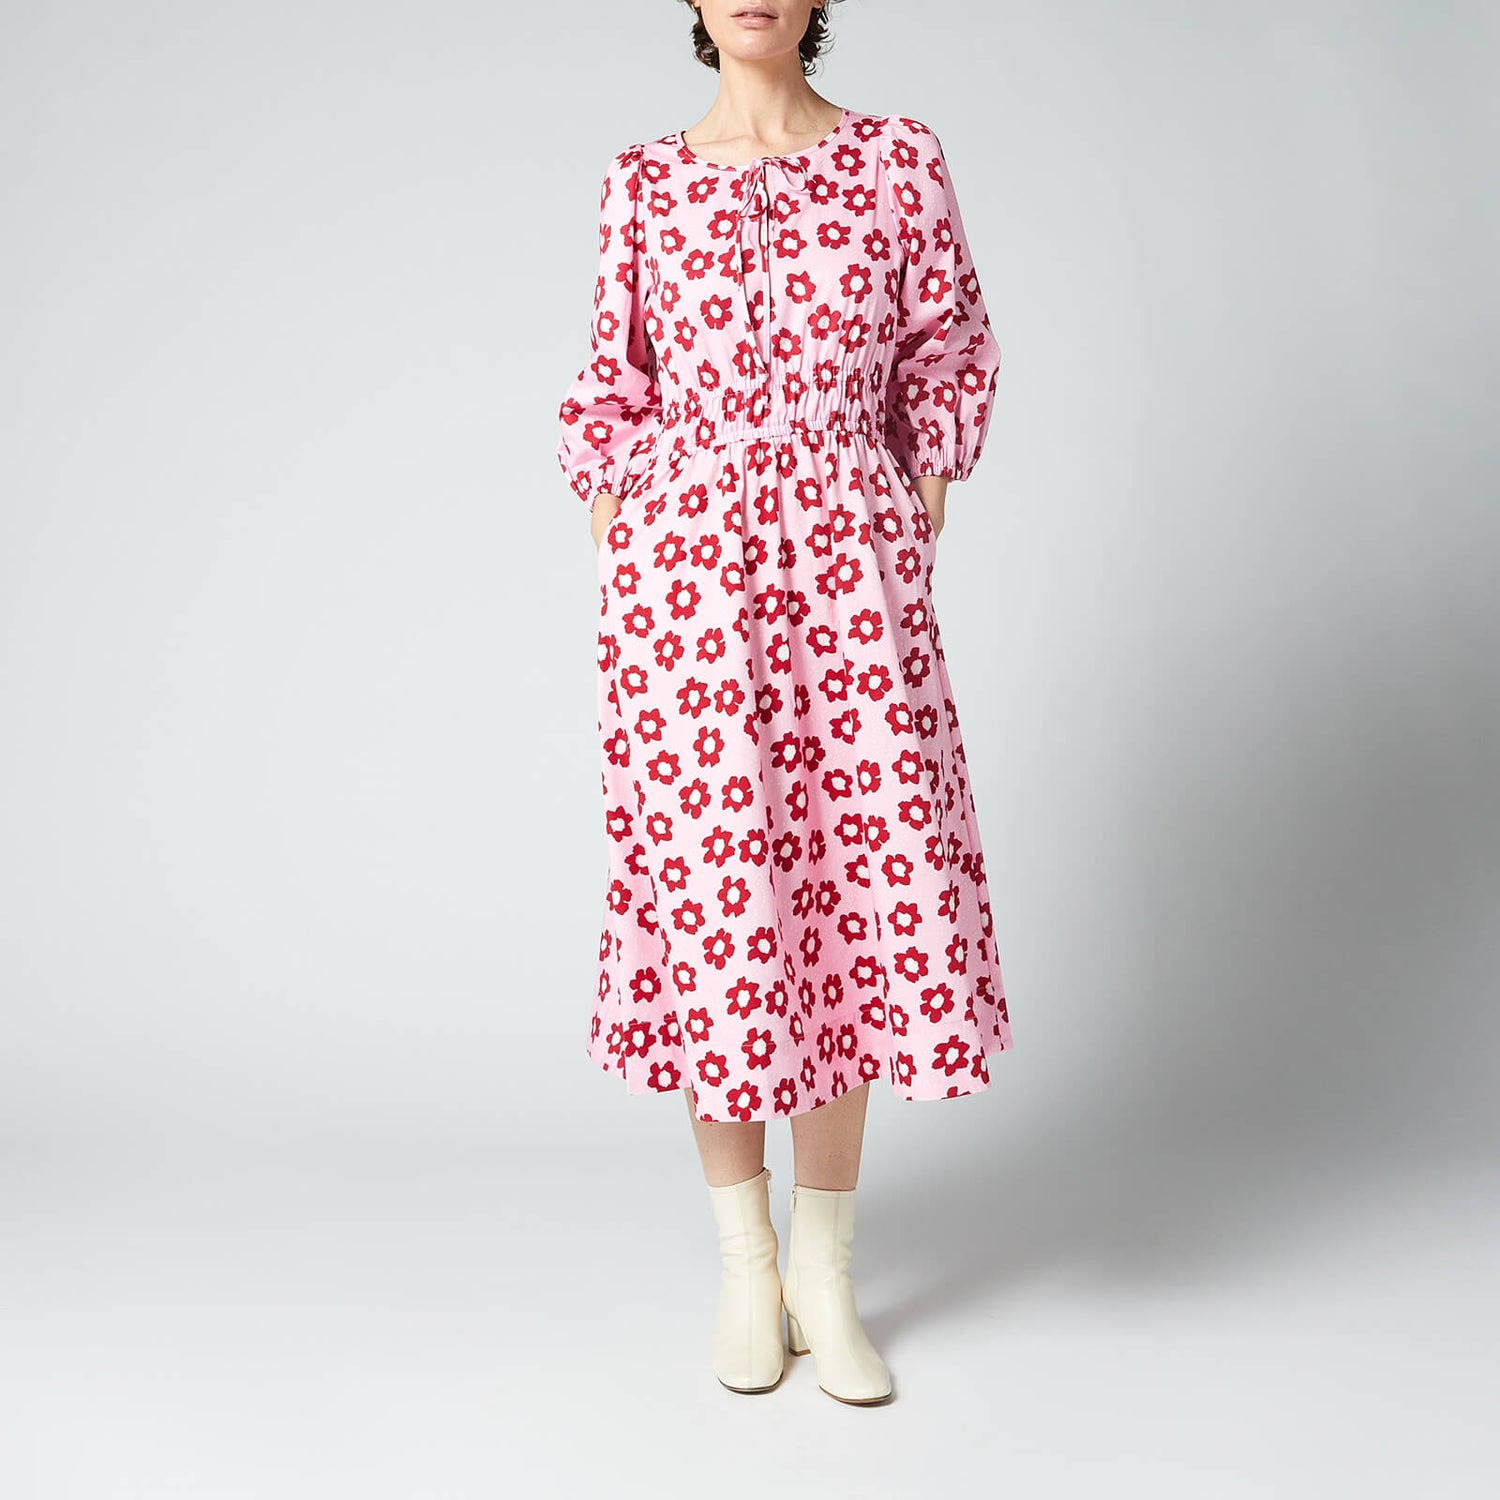 Kitri Women's Medora Pink Floral Cotton Dress - Pink Floral - UK 8